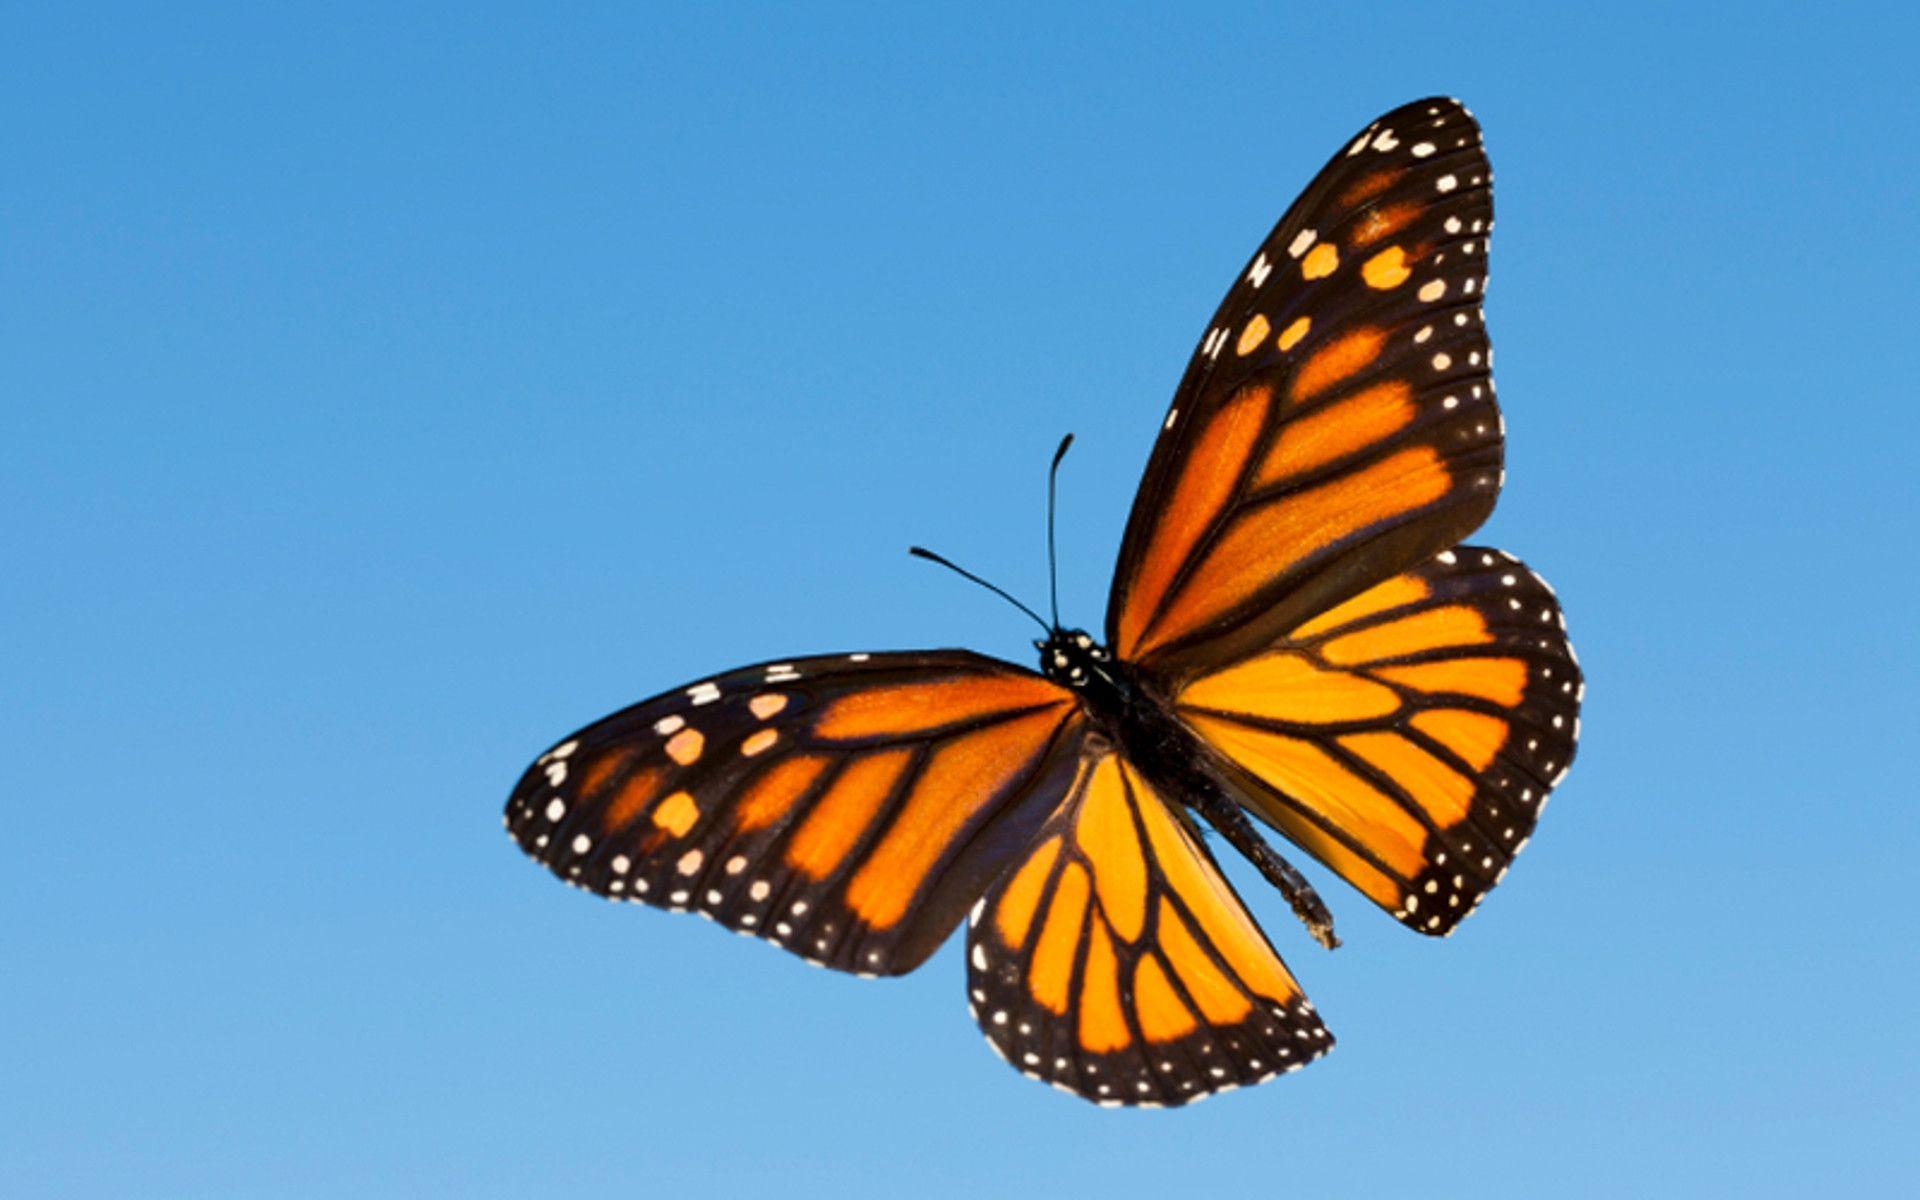 A monarch butterfly flying in the sky - Butterfly